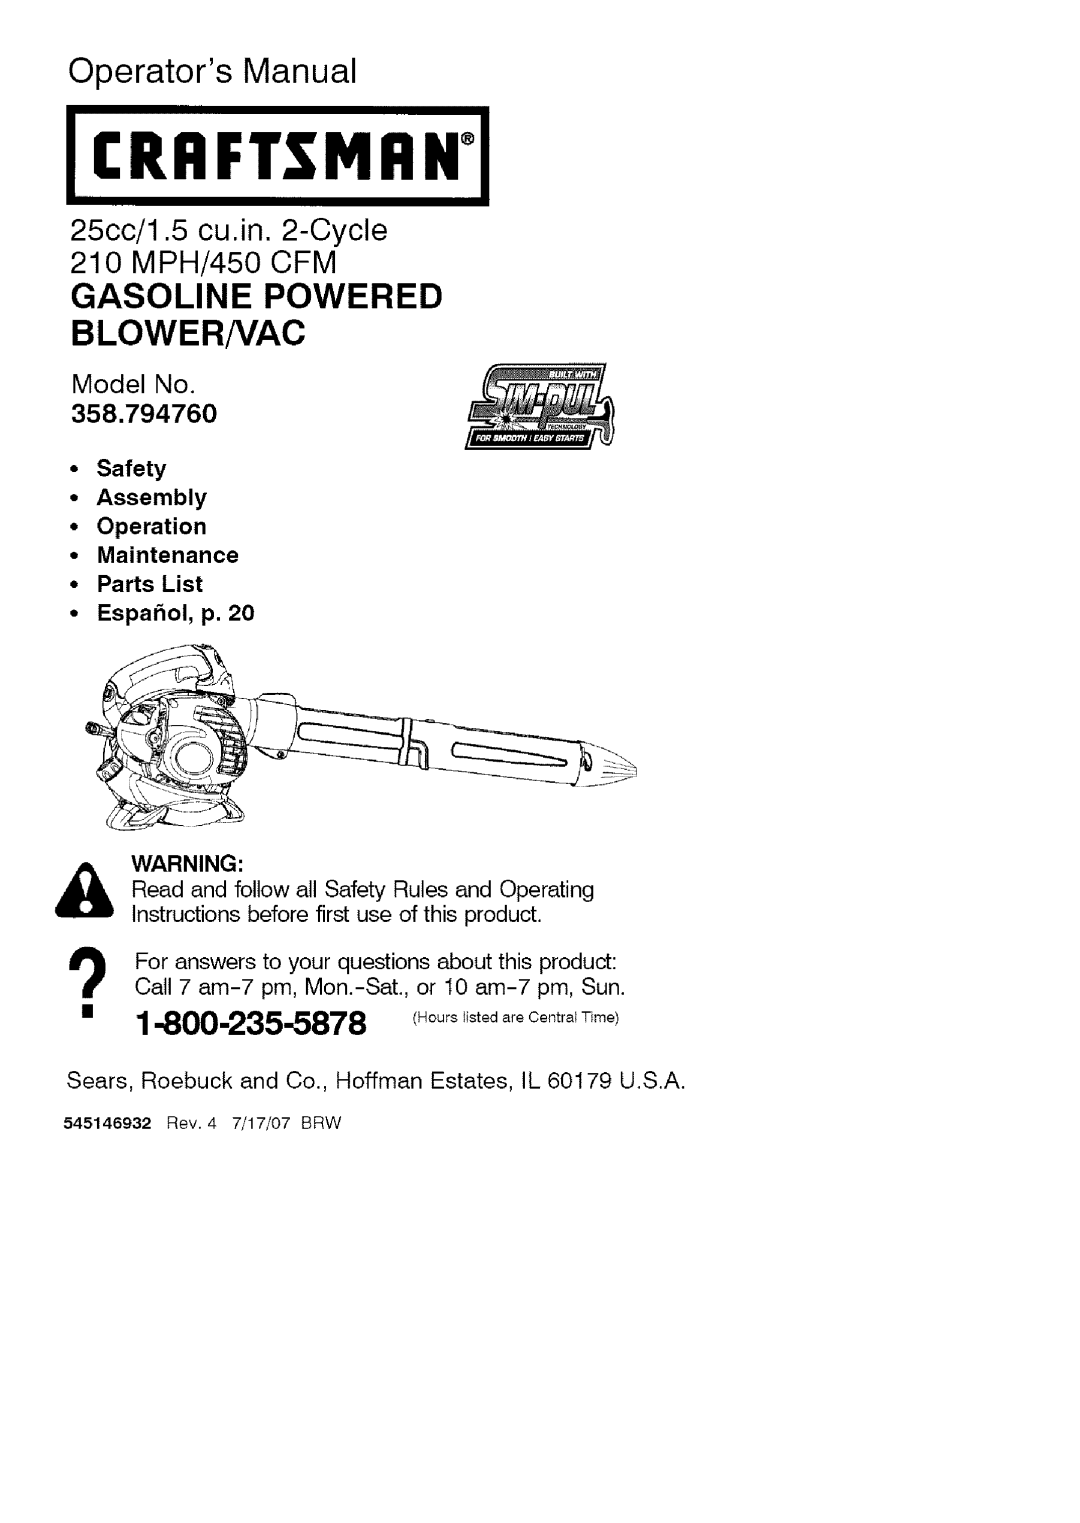 Craftsman 358.79476 manual I Crrftsmrni, Operators Manual, Gasoline Powered Blowernac, Model No, •Parts List •Espar_ol, p 